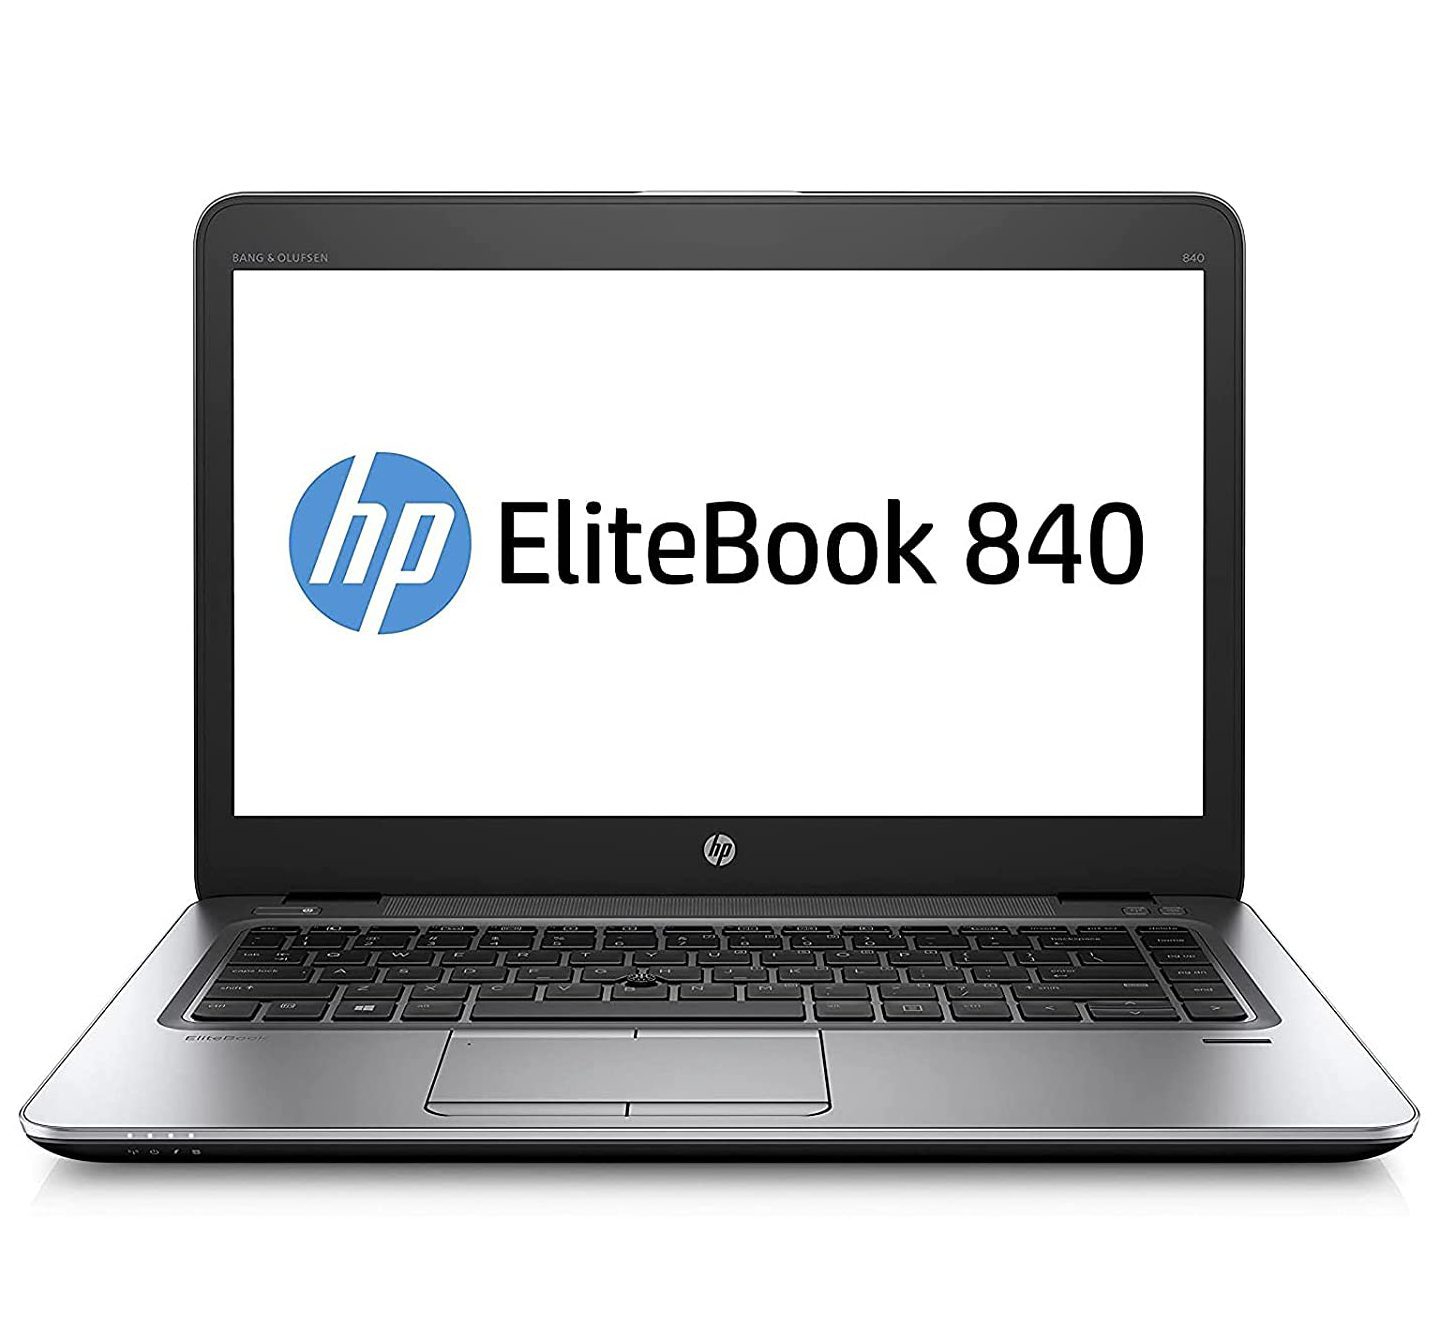 HP EliteBook 840 G3 FHD Laptop